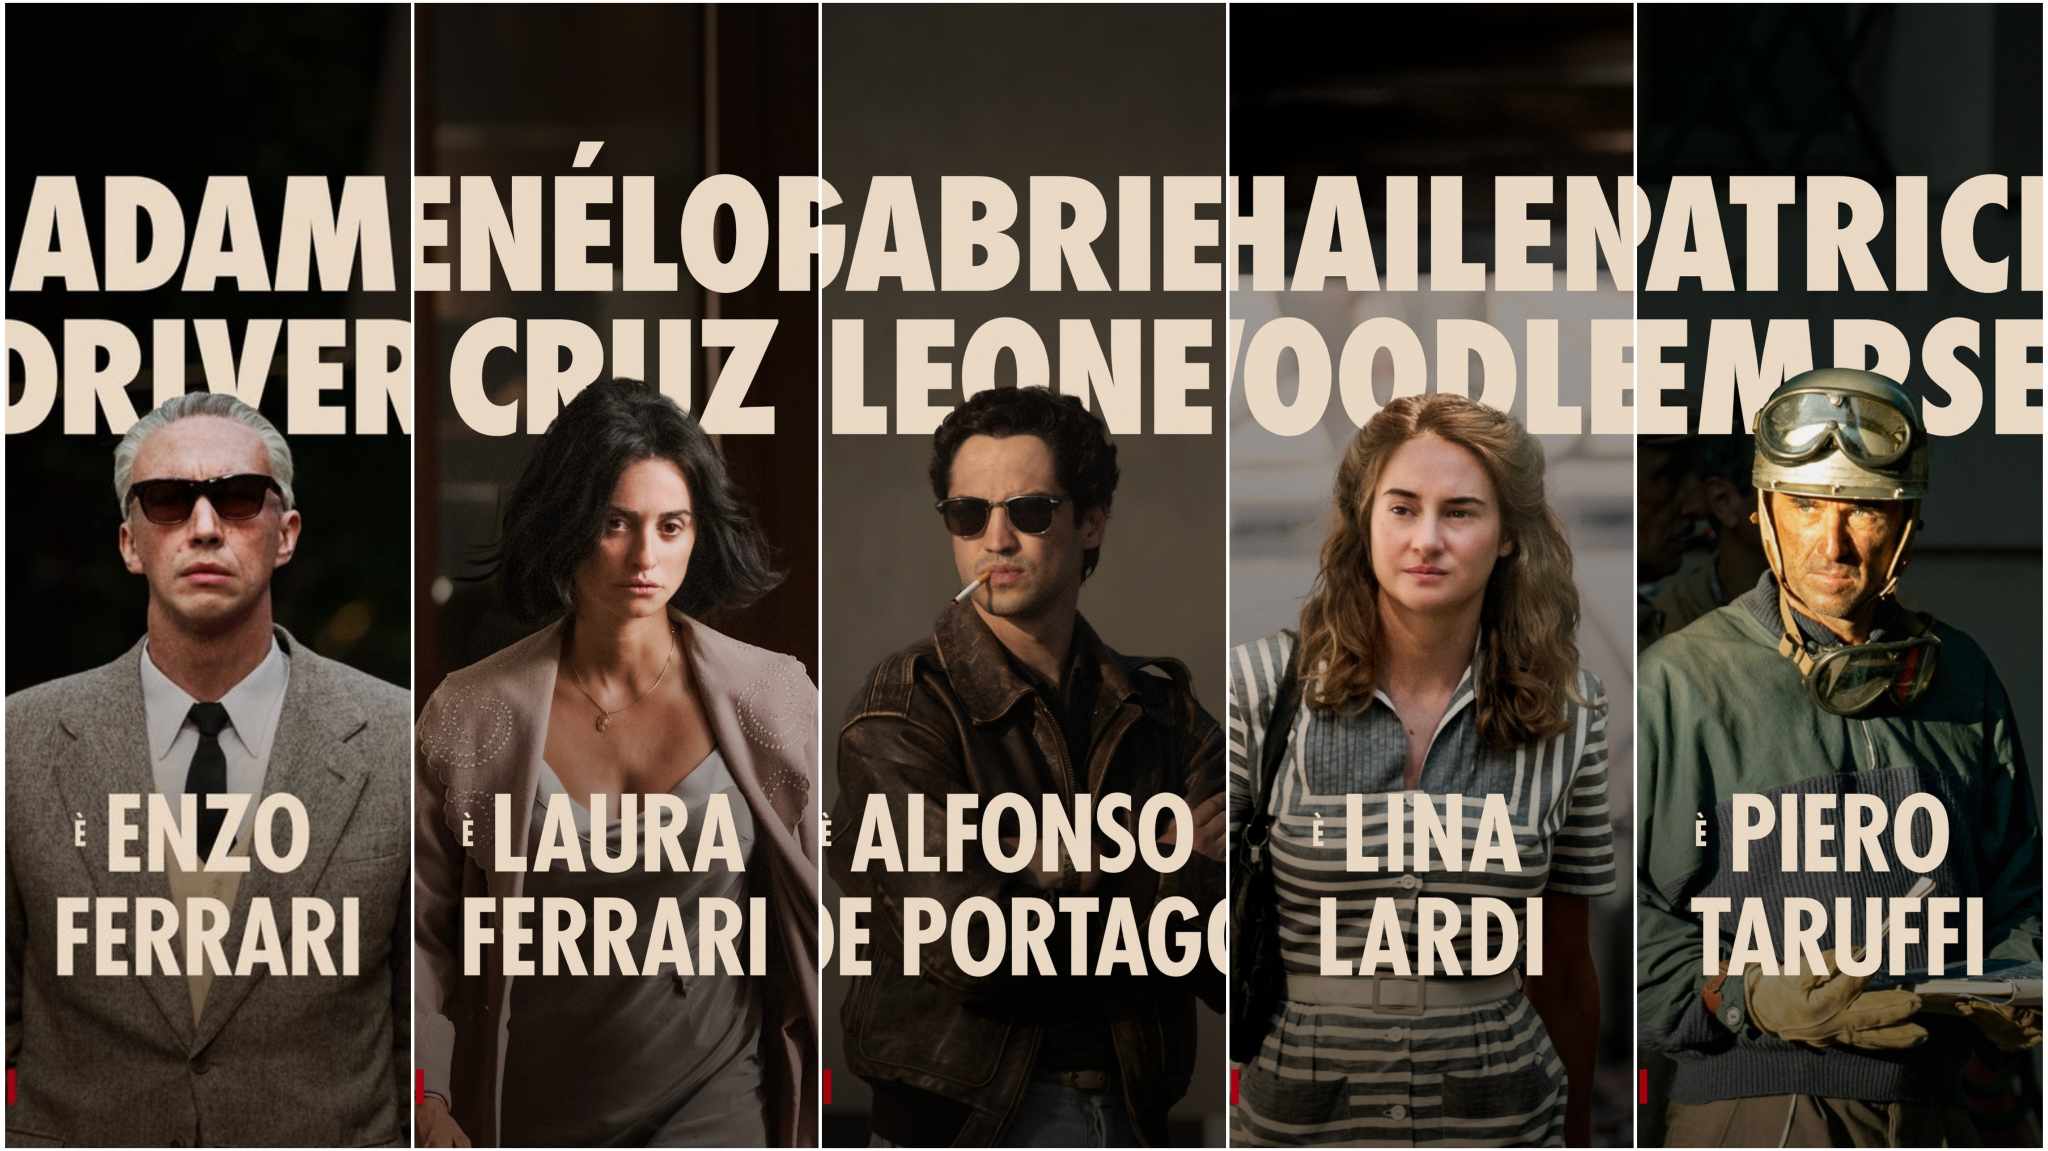 Ferrari: i protagonisti ritratti nei character poster italiani